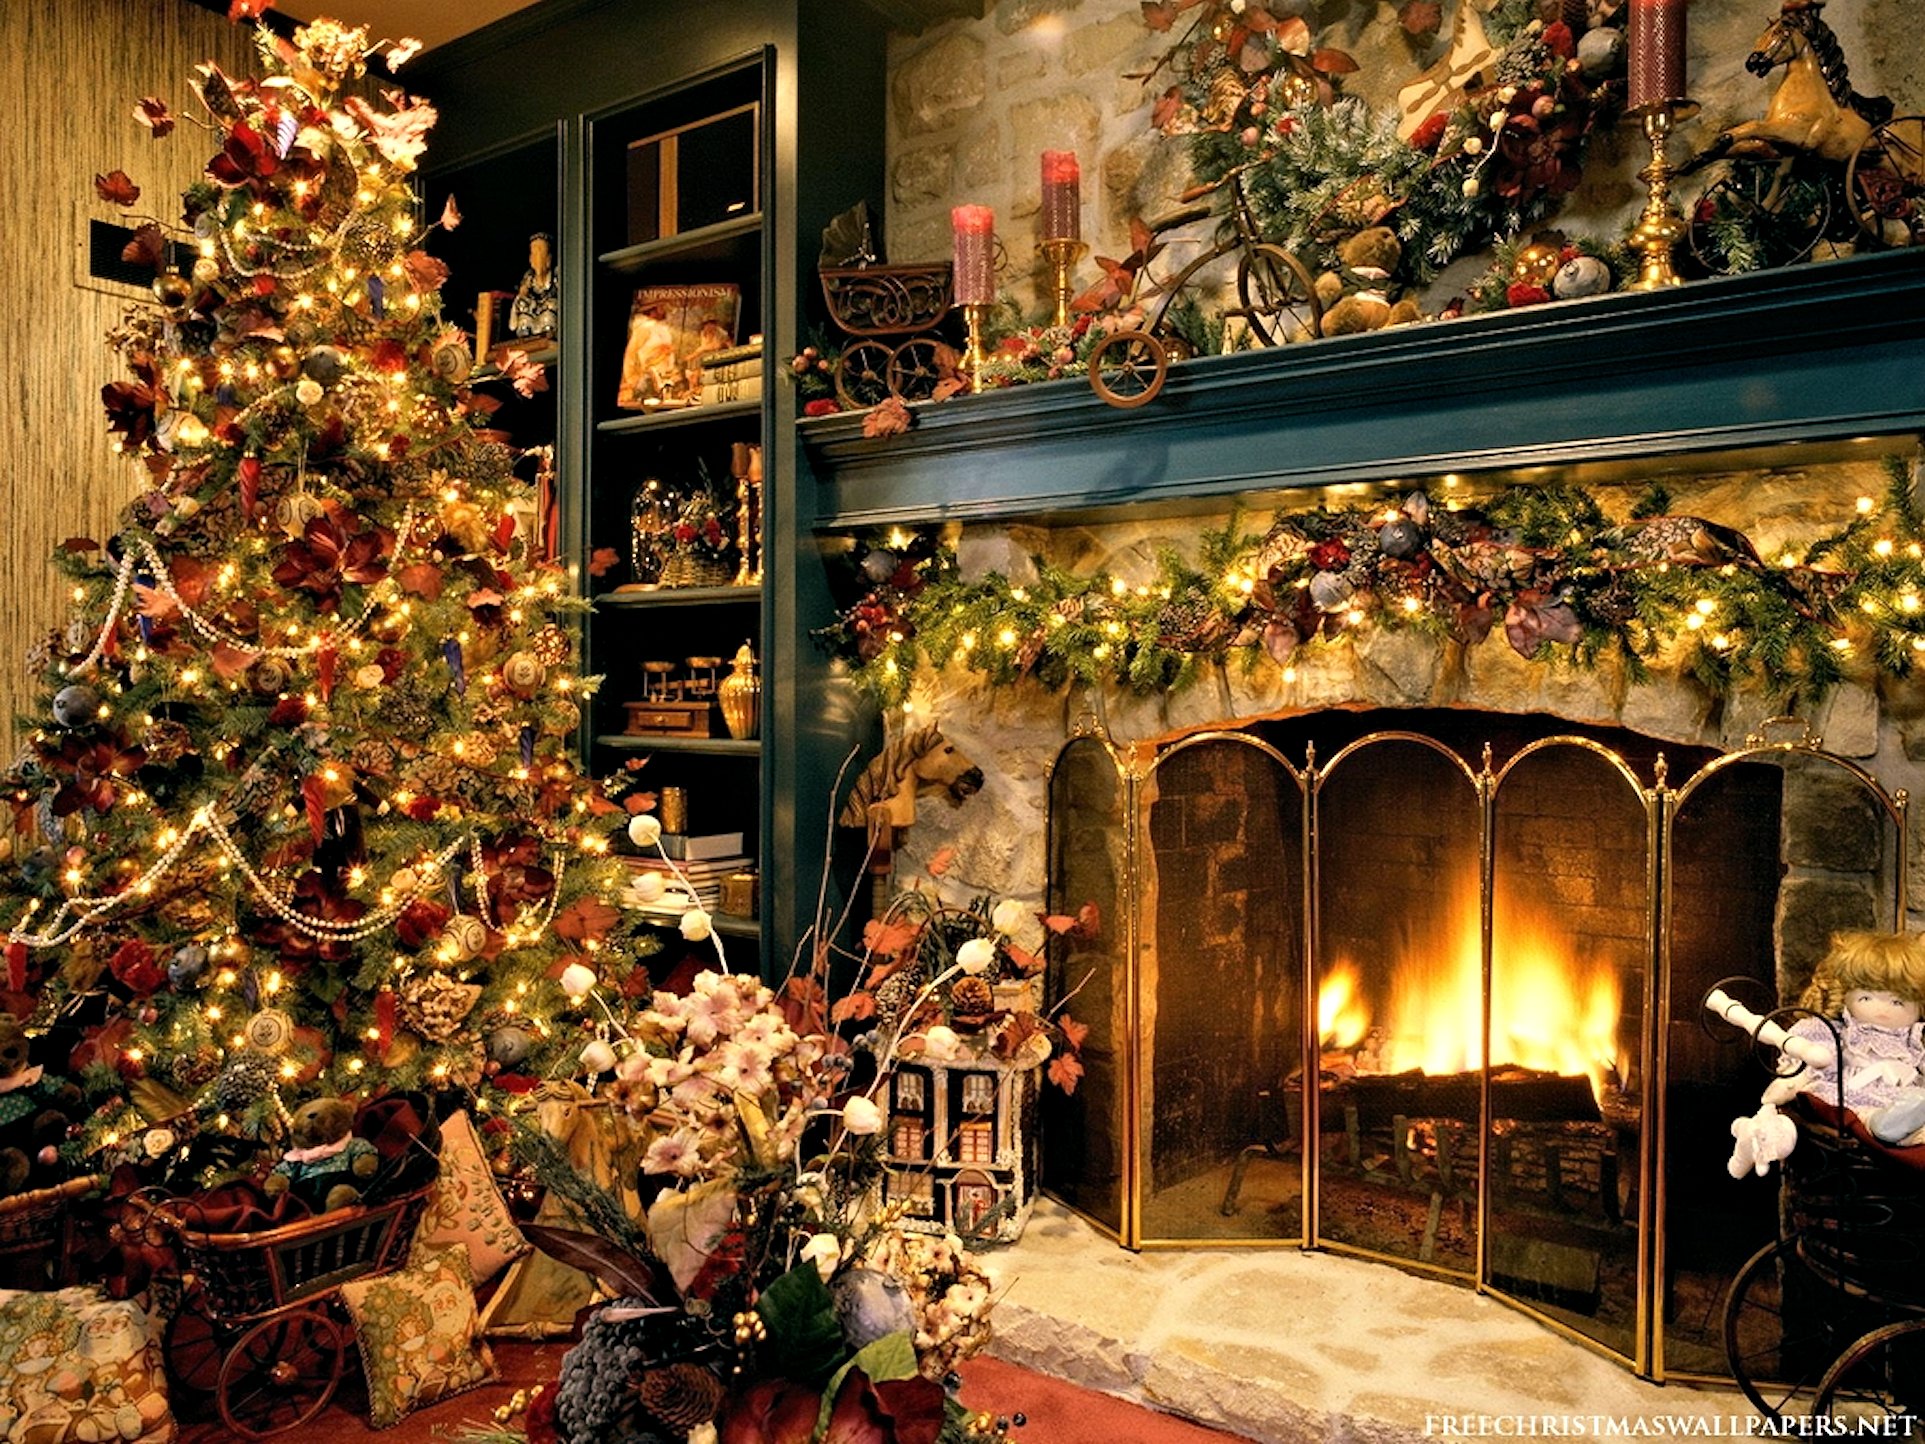 73+] Free Christmas Fireplace Wallpaper - WallpaperSafari